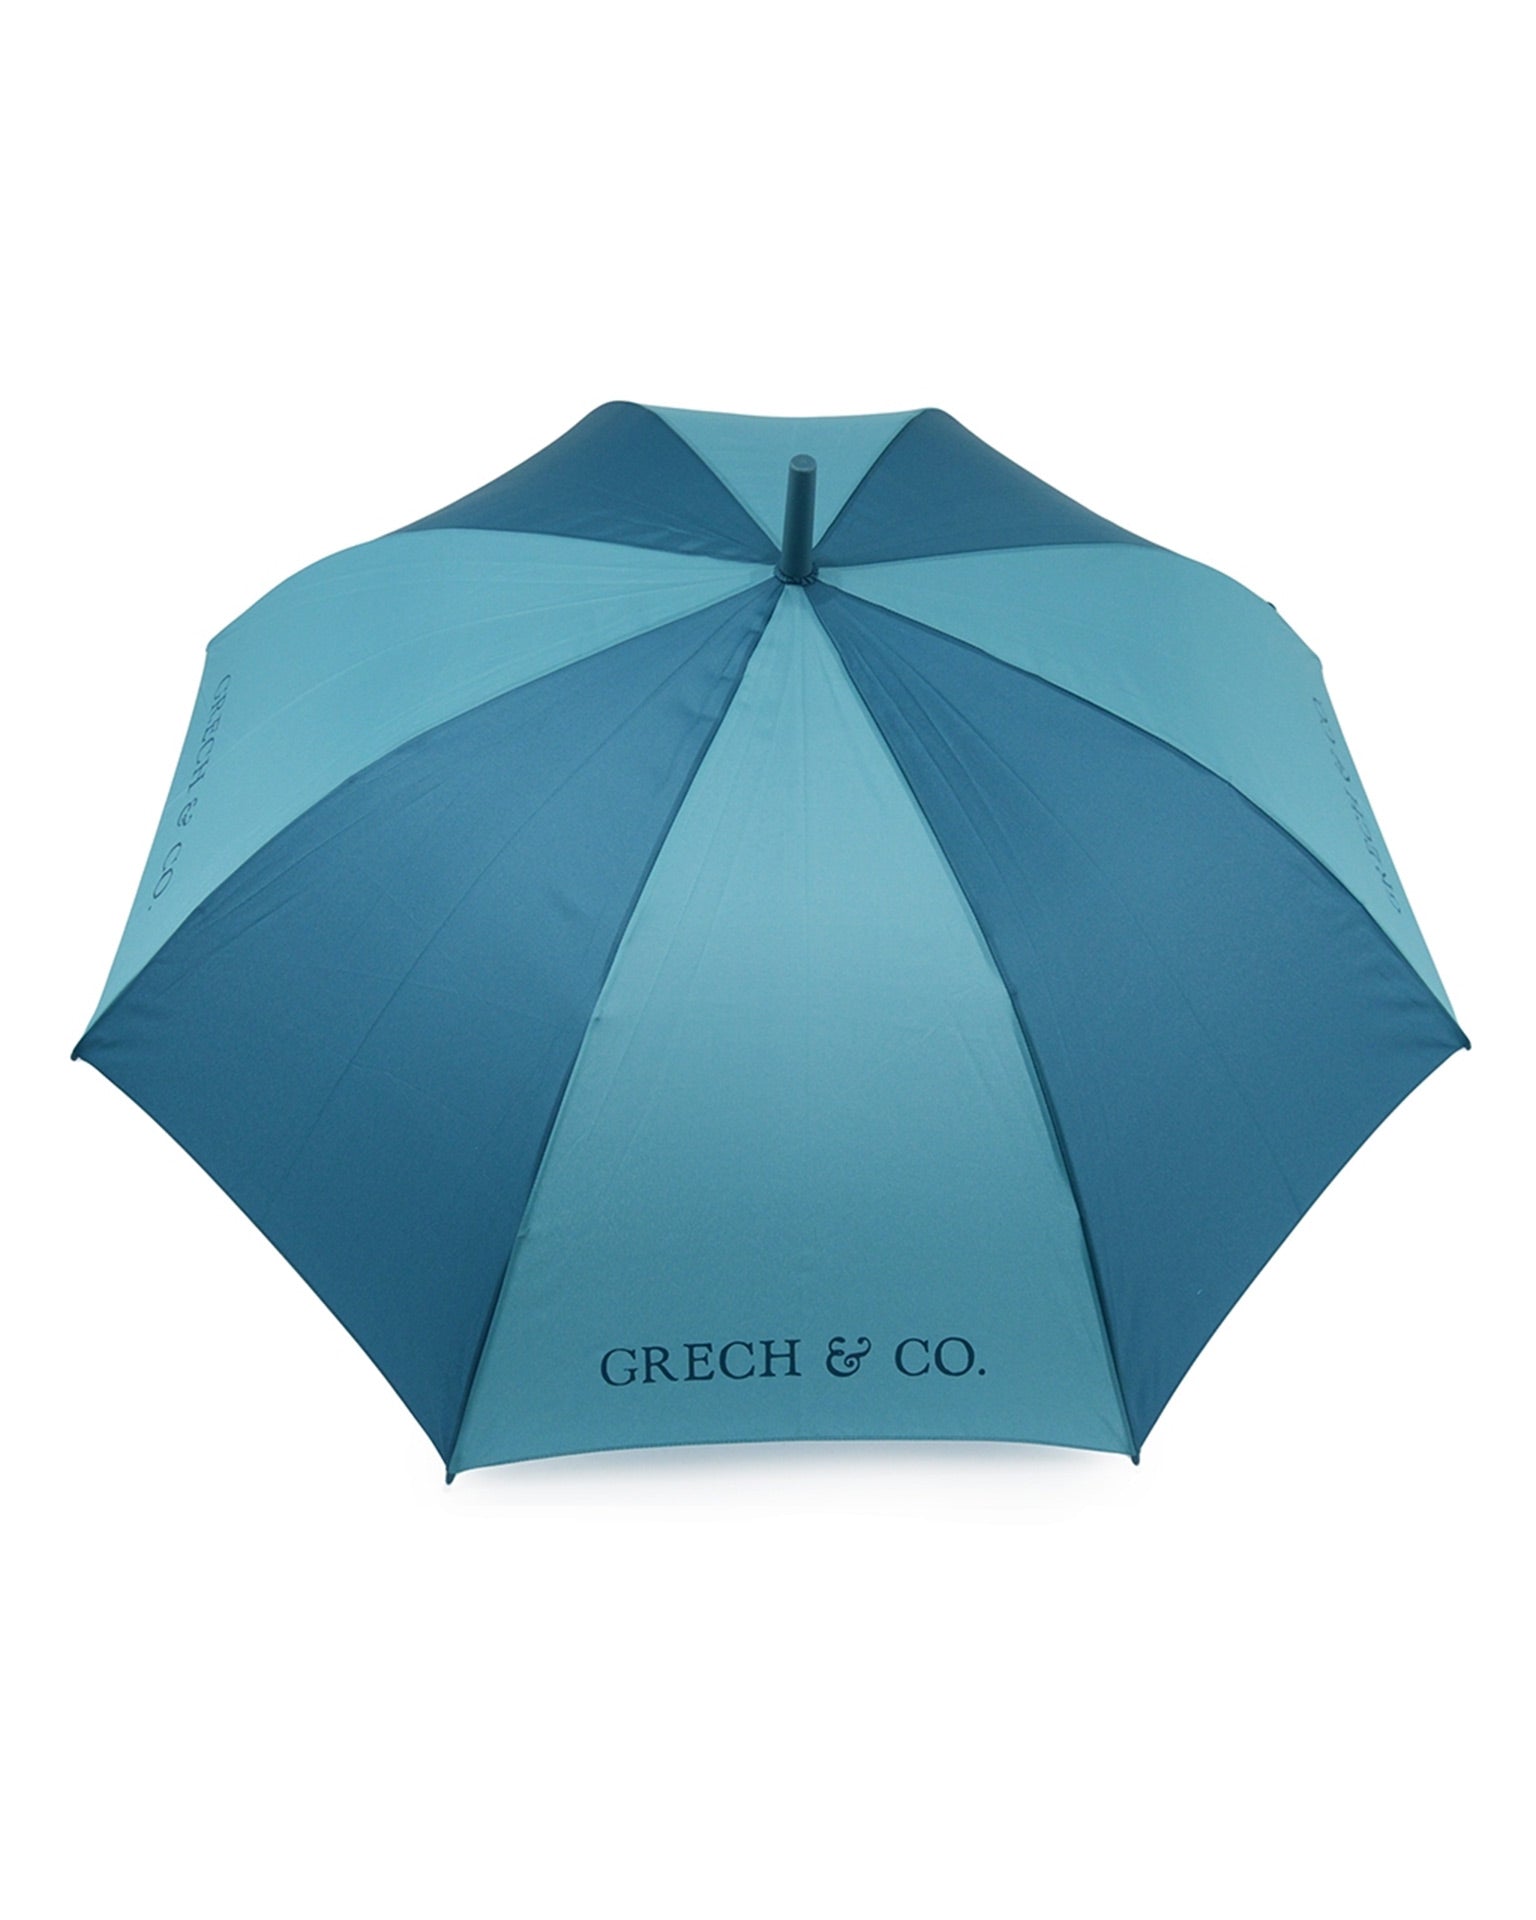 Little grech + co accessories adult umbrella in laguna